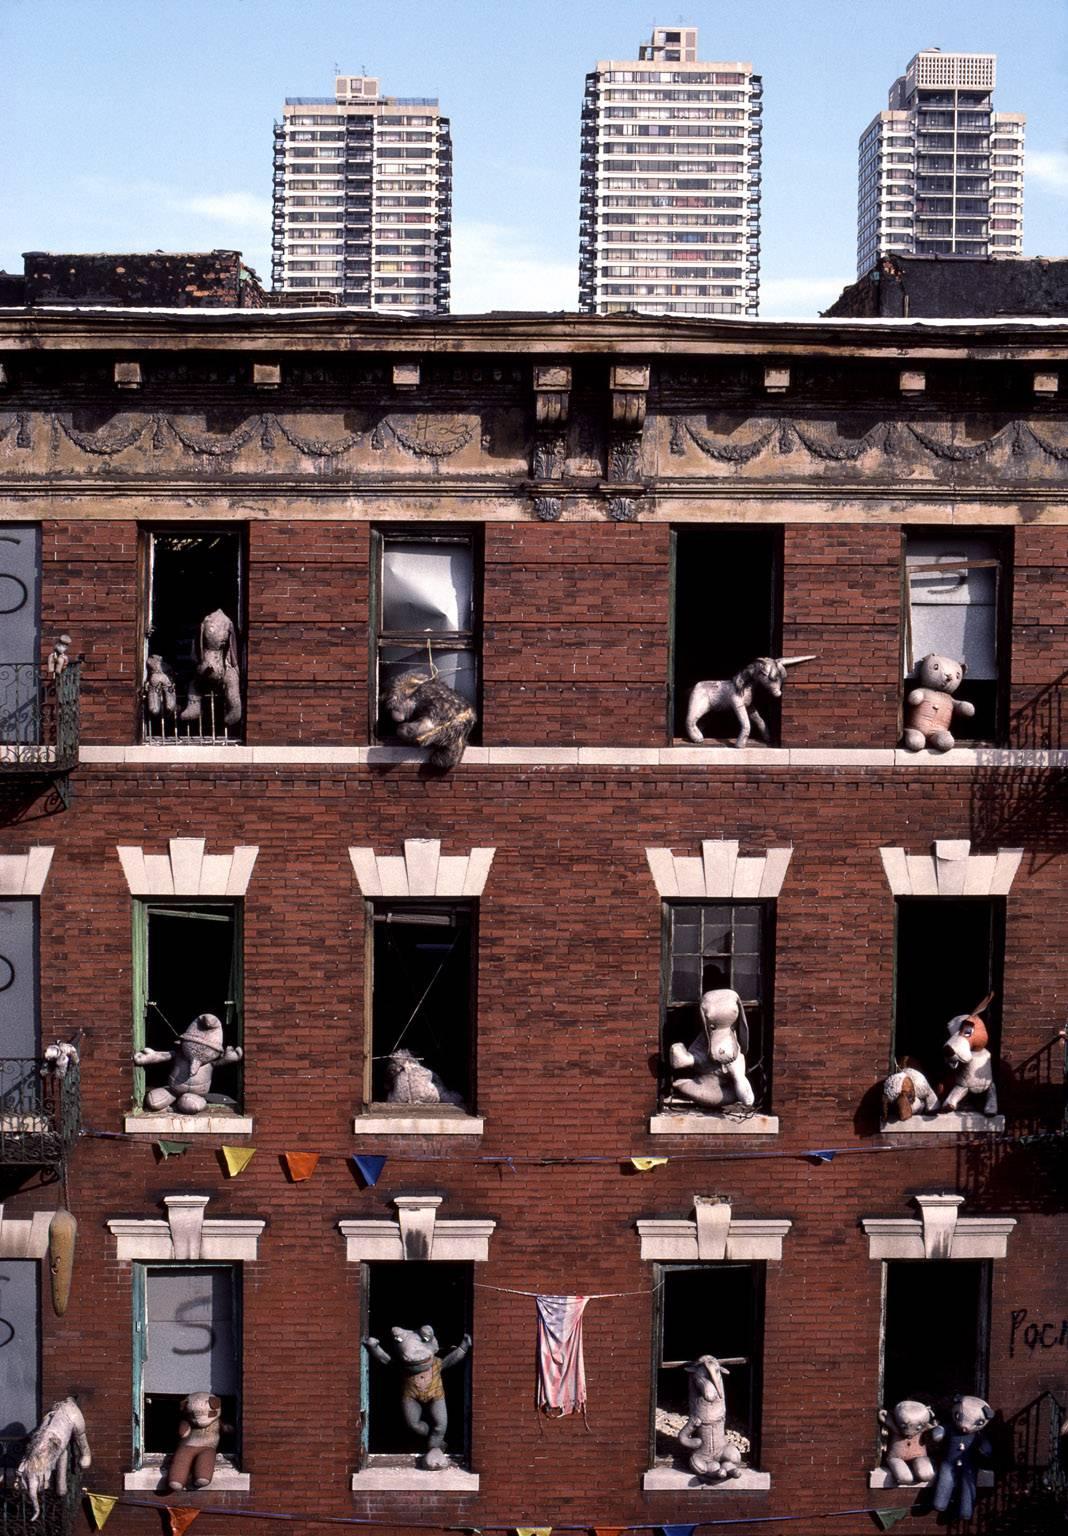 Joseph Rodriguez Color Photograph - Dolls in abandoned building, Spanish Harlem, NY